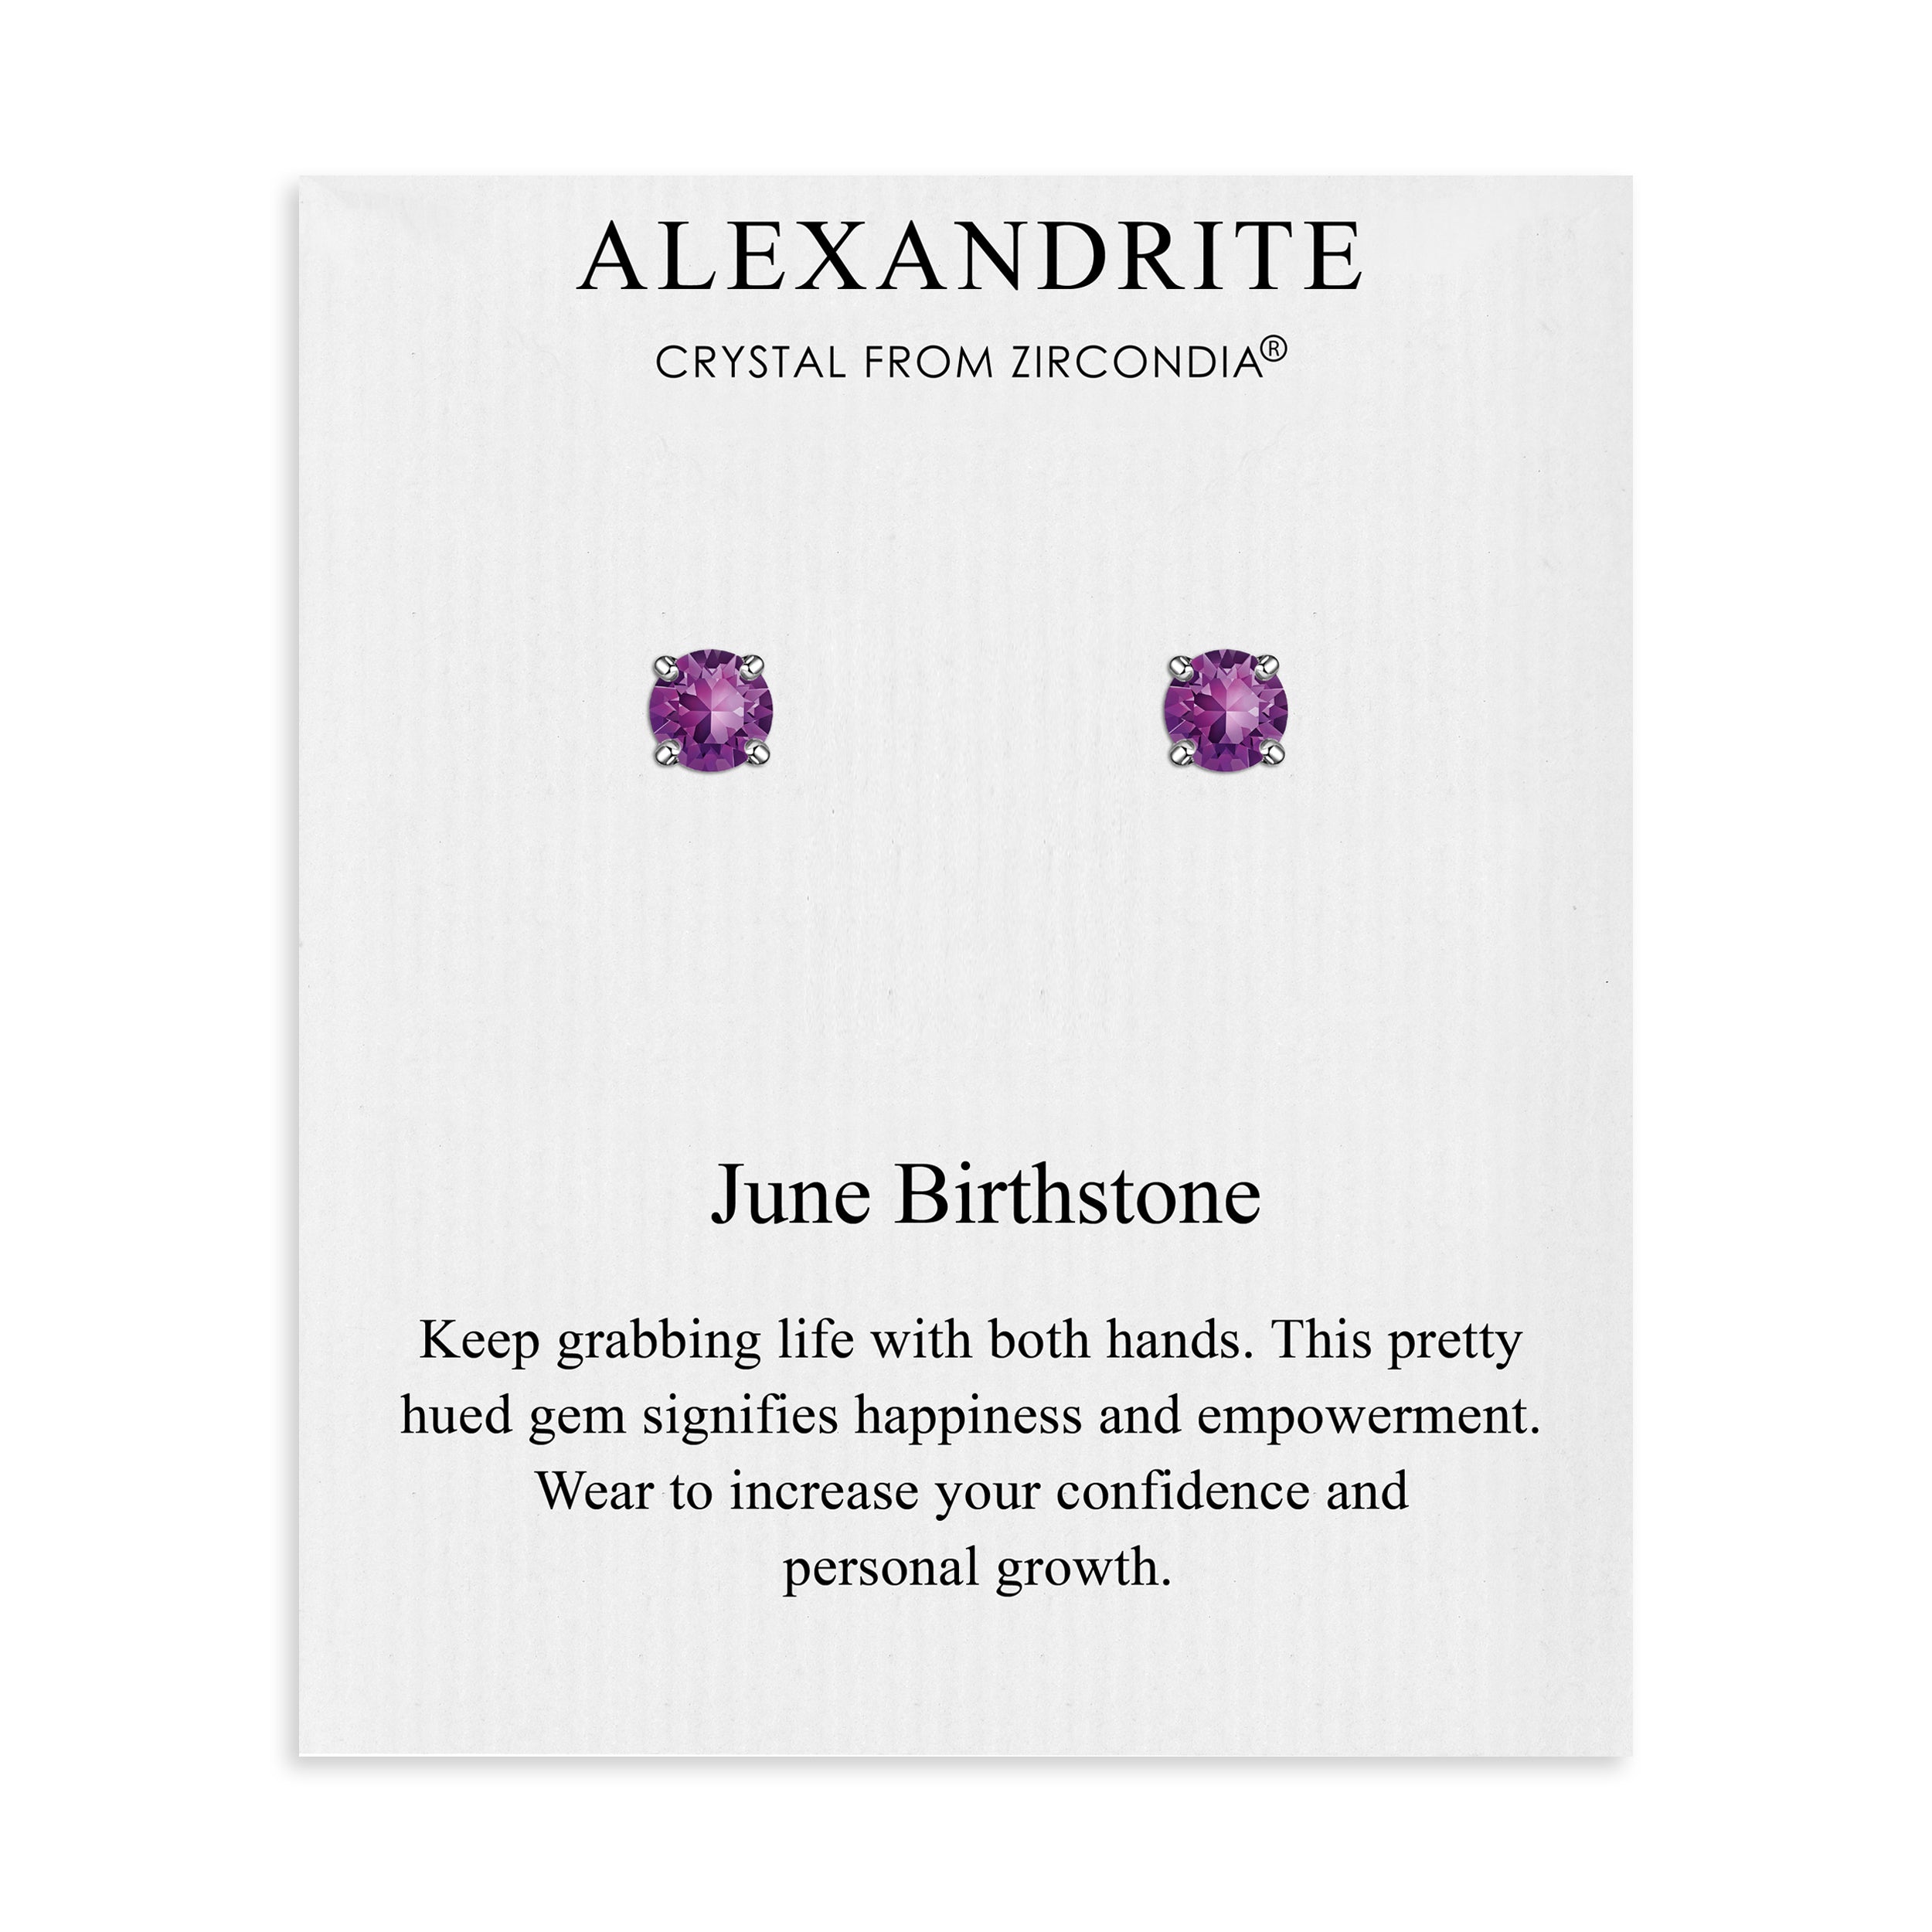 June (Alexandrite) Birthstone Earrings Created with Zircondia® Crystals by Philip Jones Jewellery